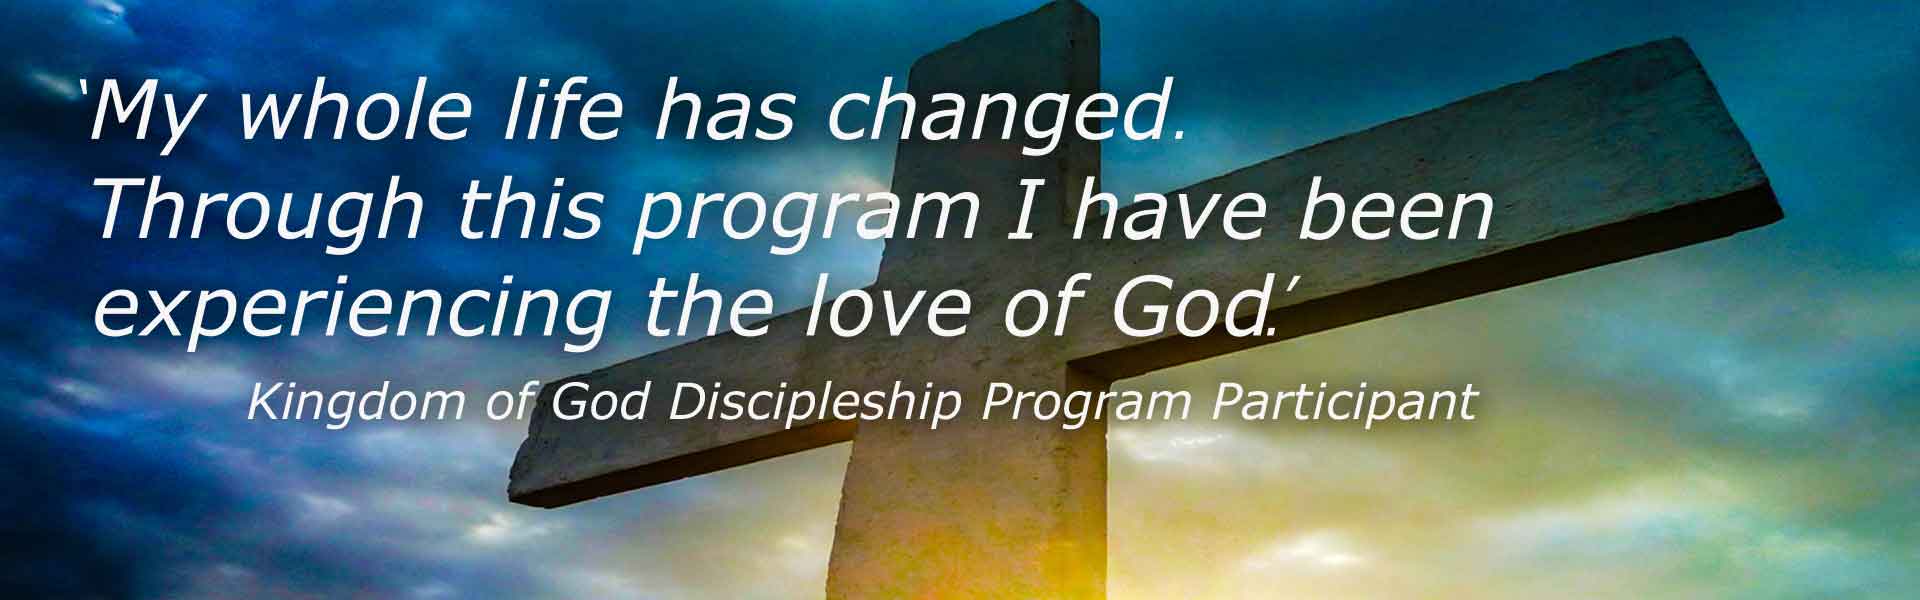 Kingdom-of-God-Discipleship-Program-Testimony